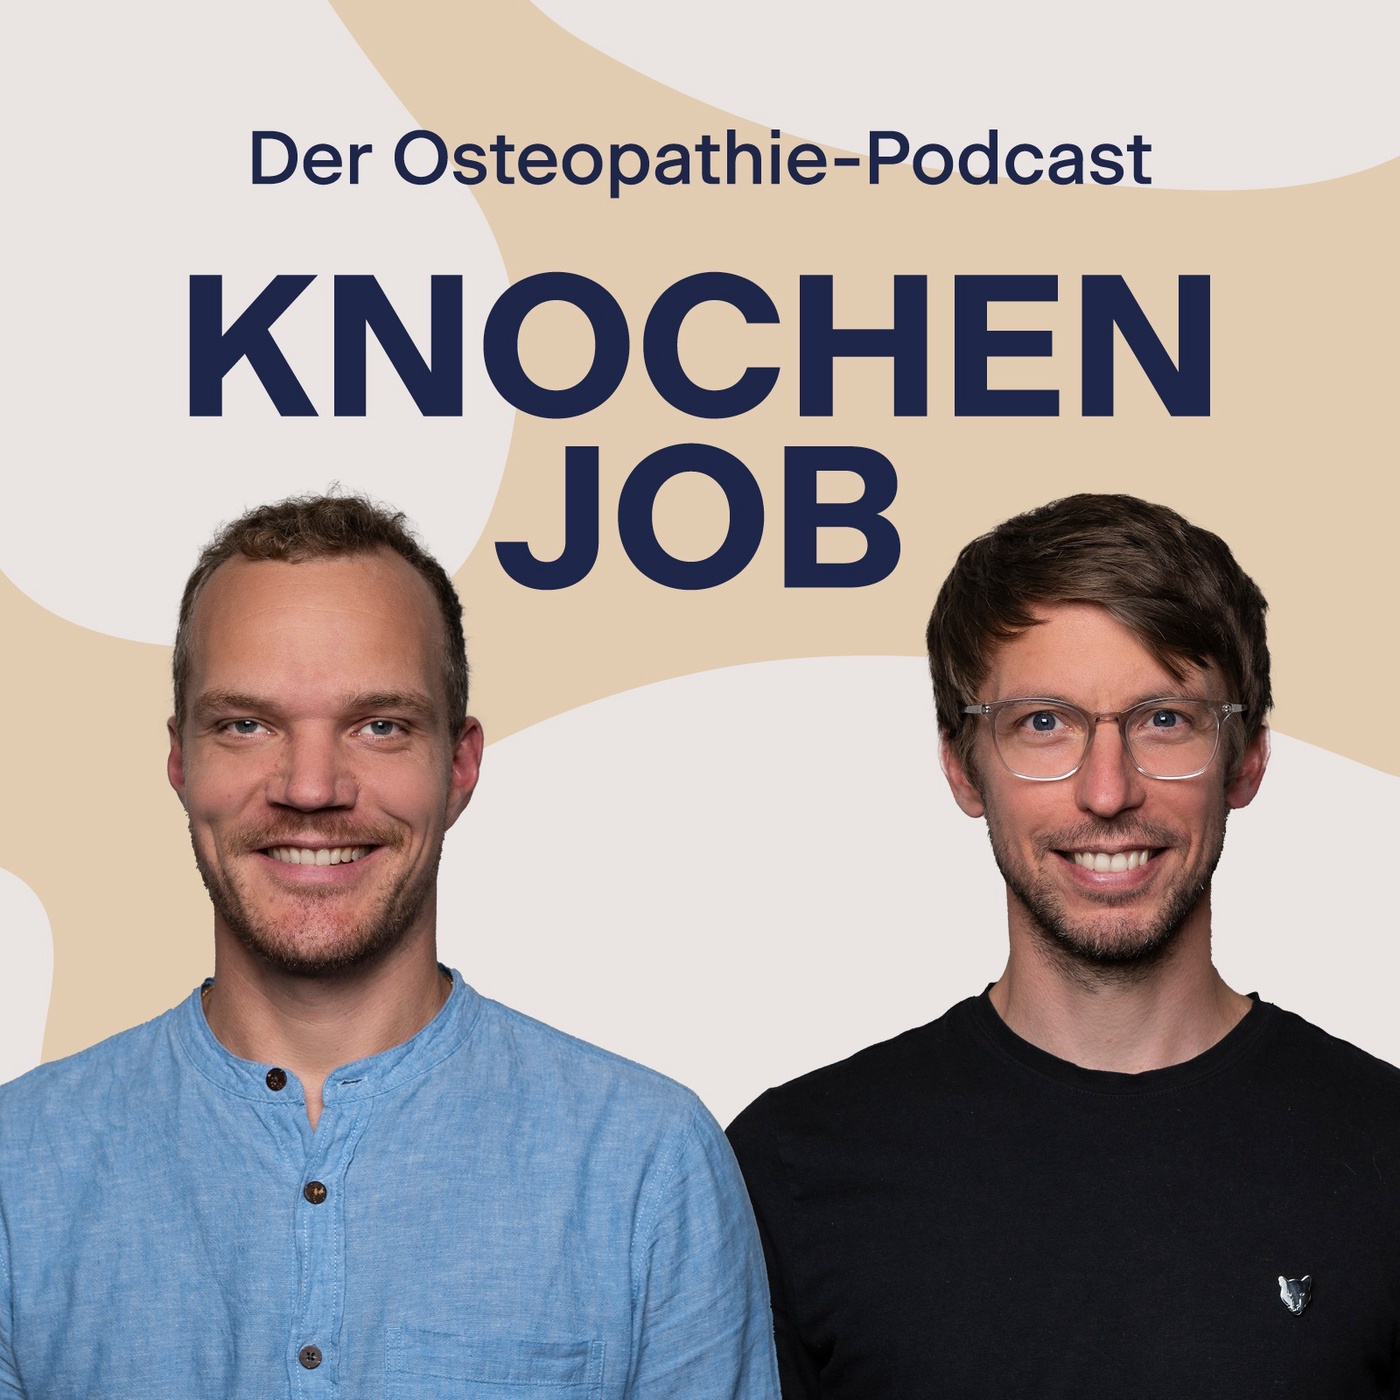 Knochenjob - Der Osteopathie-Podcast